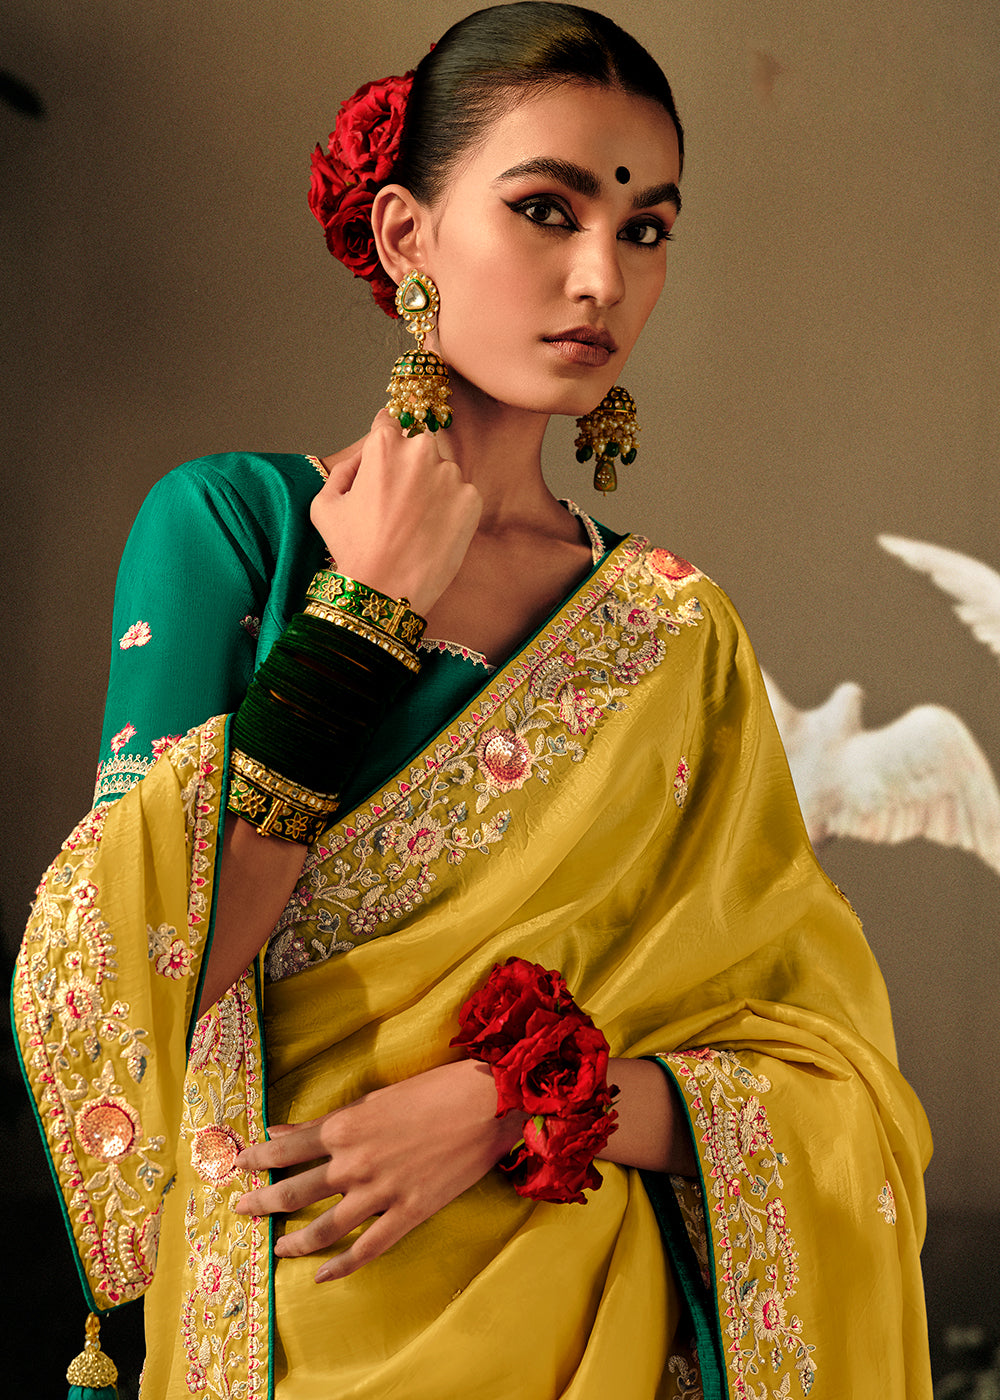 Buy Now Maize Yellow Khatli Work Embroidered Designer Wedding Saree Online in USA, UK, Canada & Worldwide at Empress Clothing. 